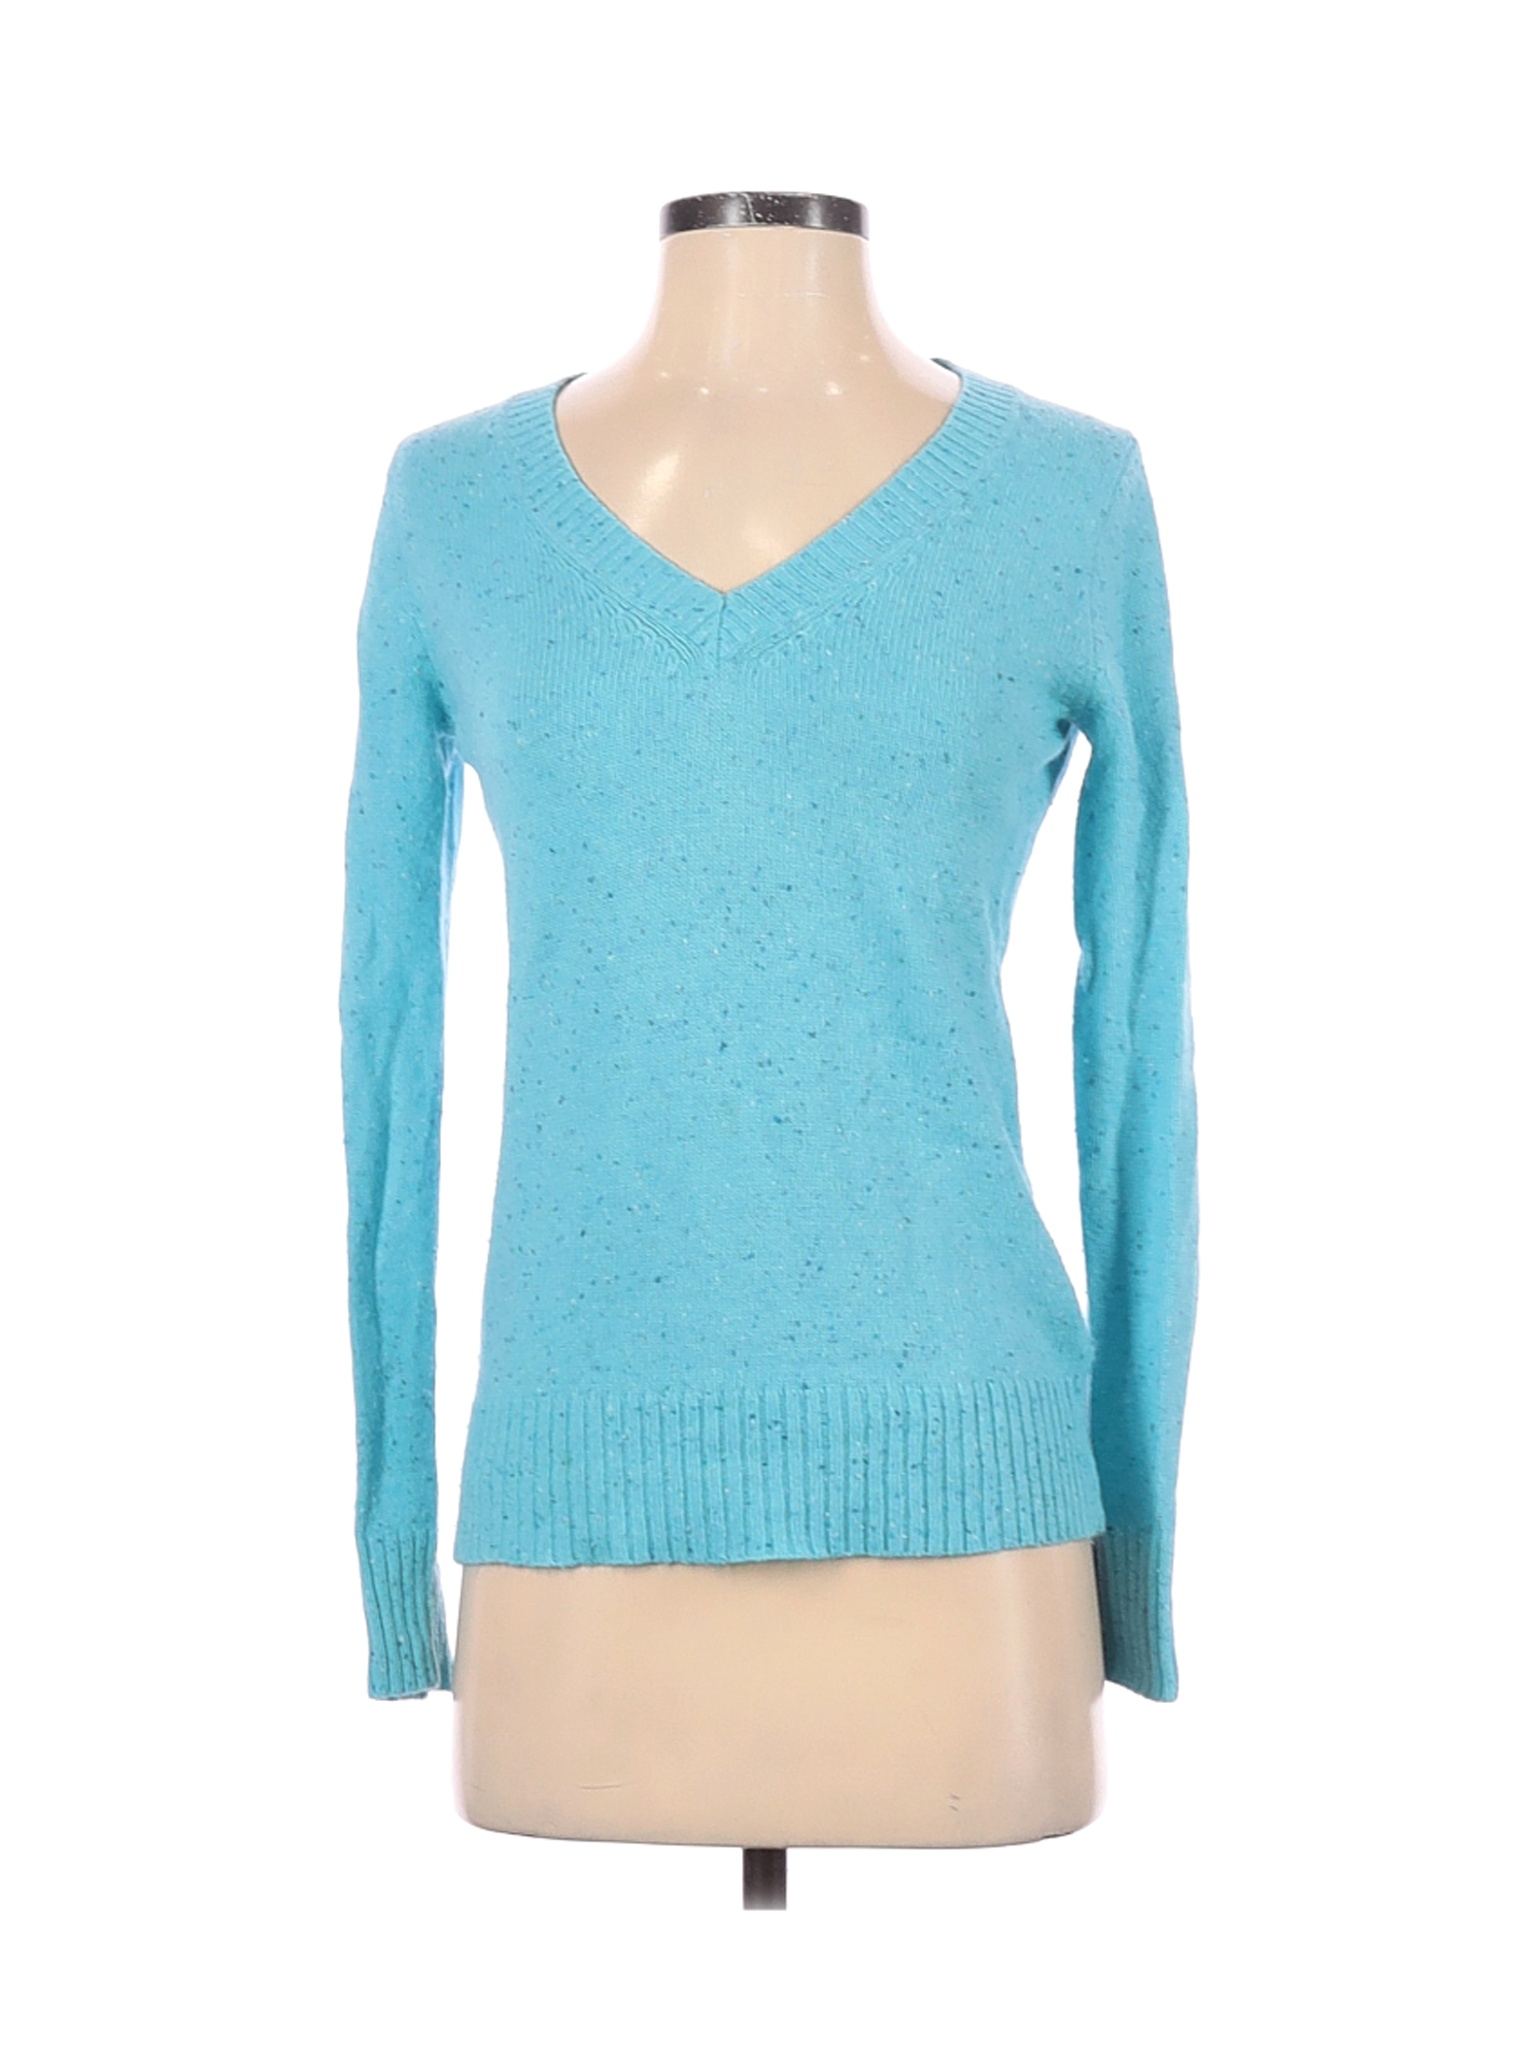 Old Navy Women Blue Pullover Sweater S | eBay